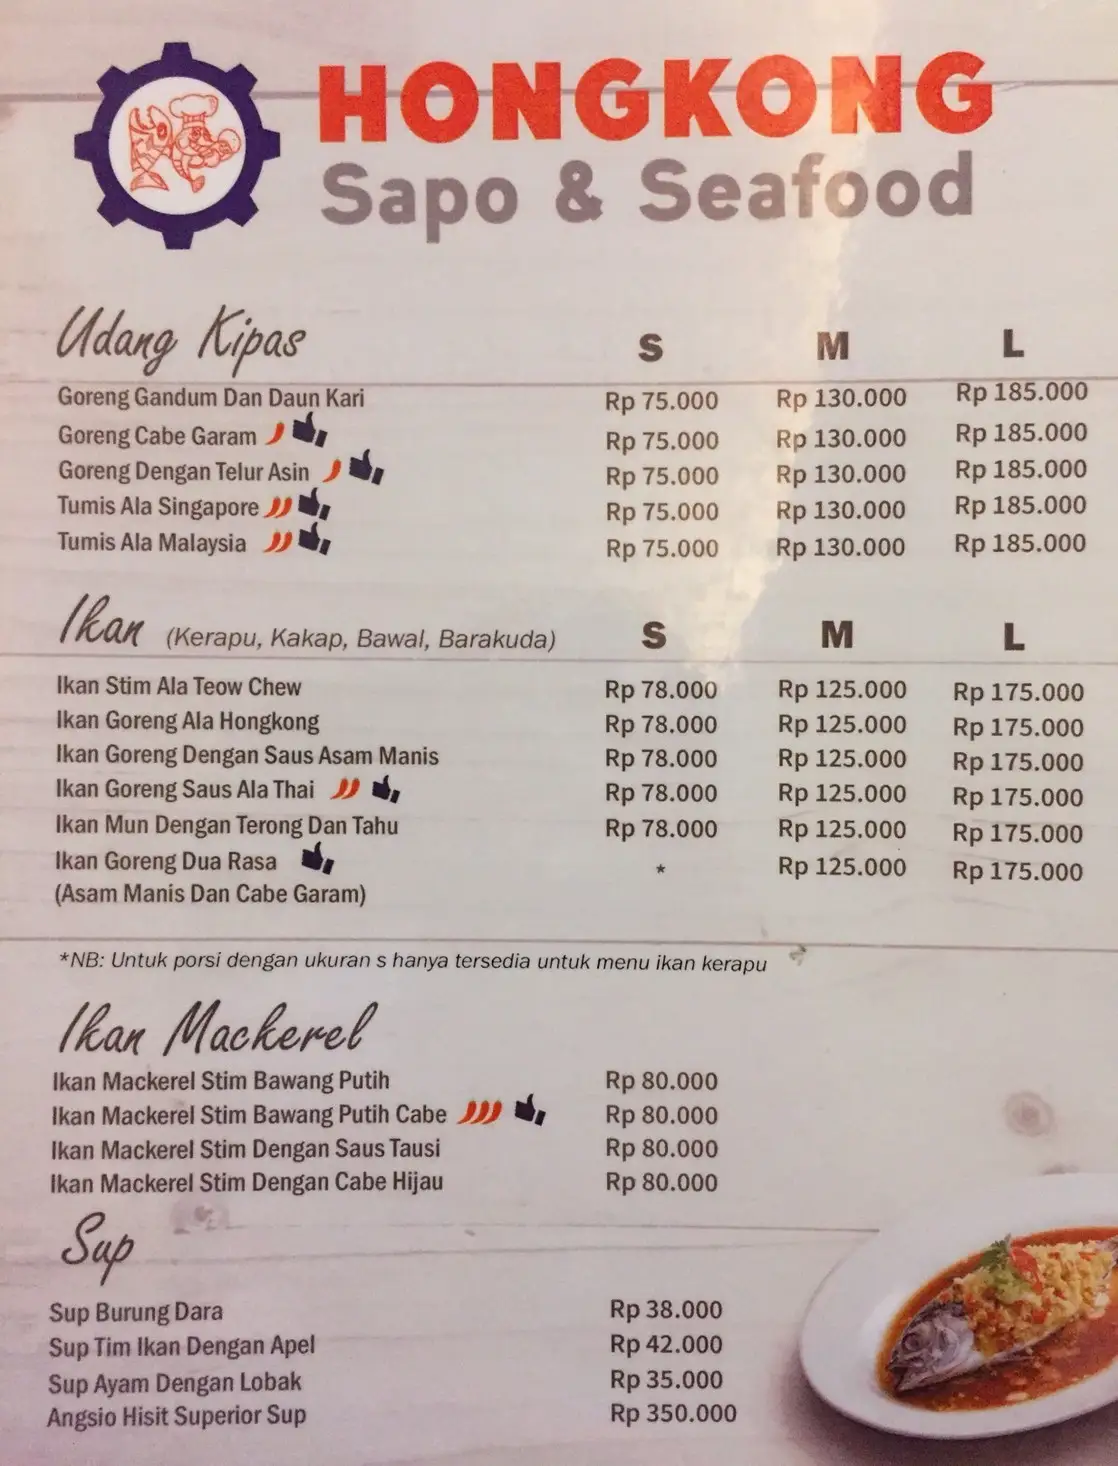 Hongkong Sapo & Seafood